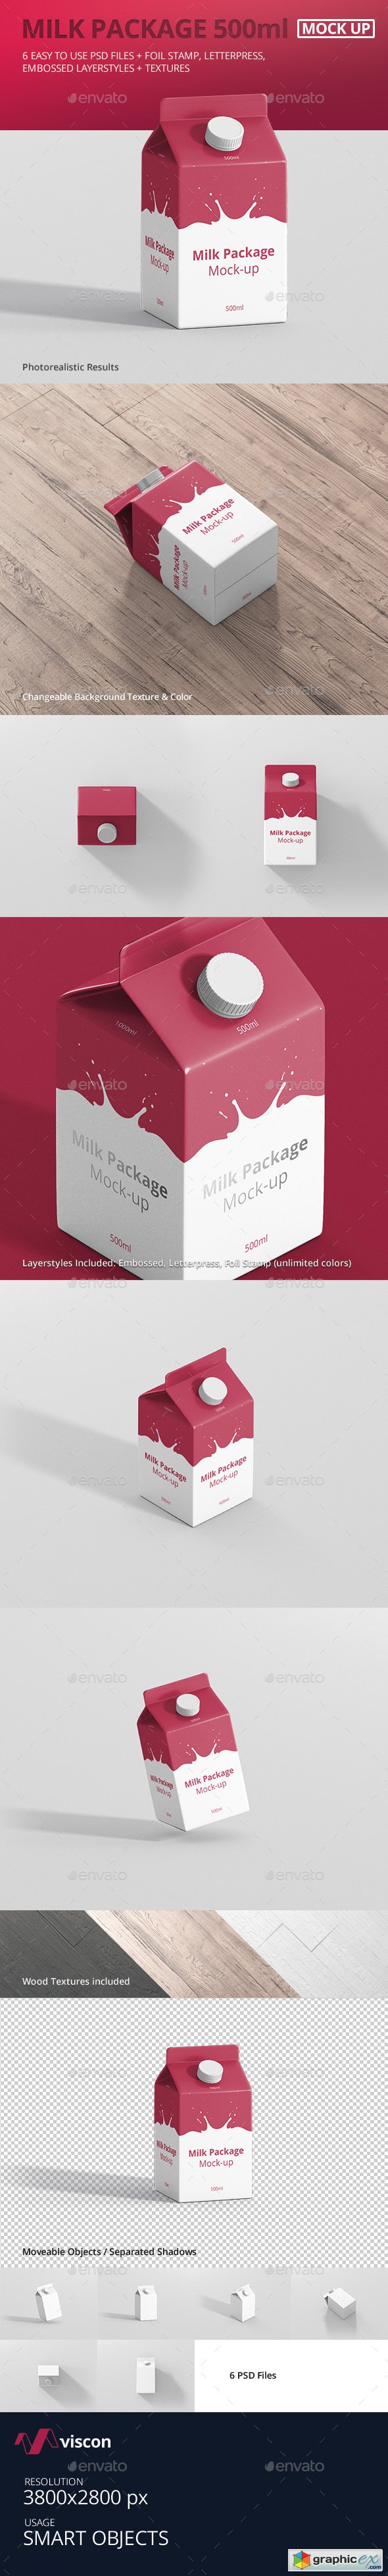 Juice / Milk Mockup - 500ml Carton Box